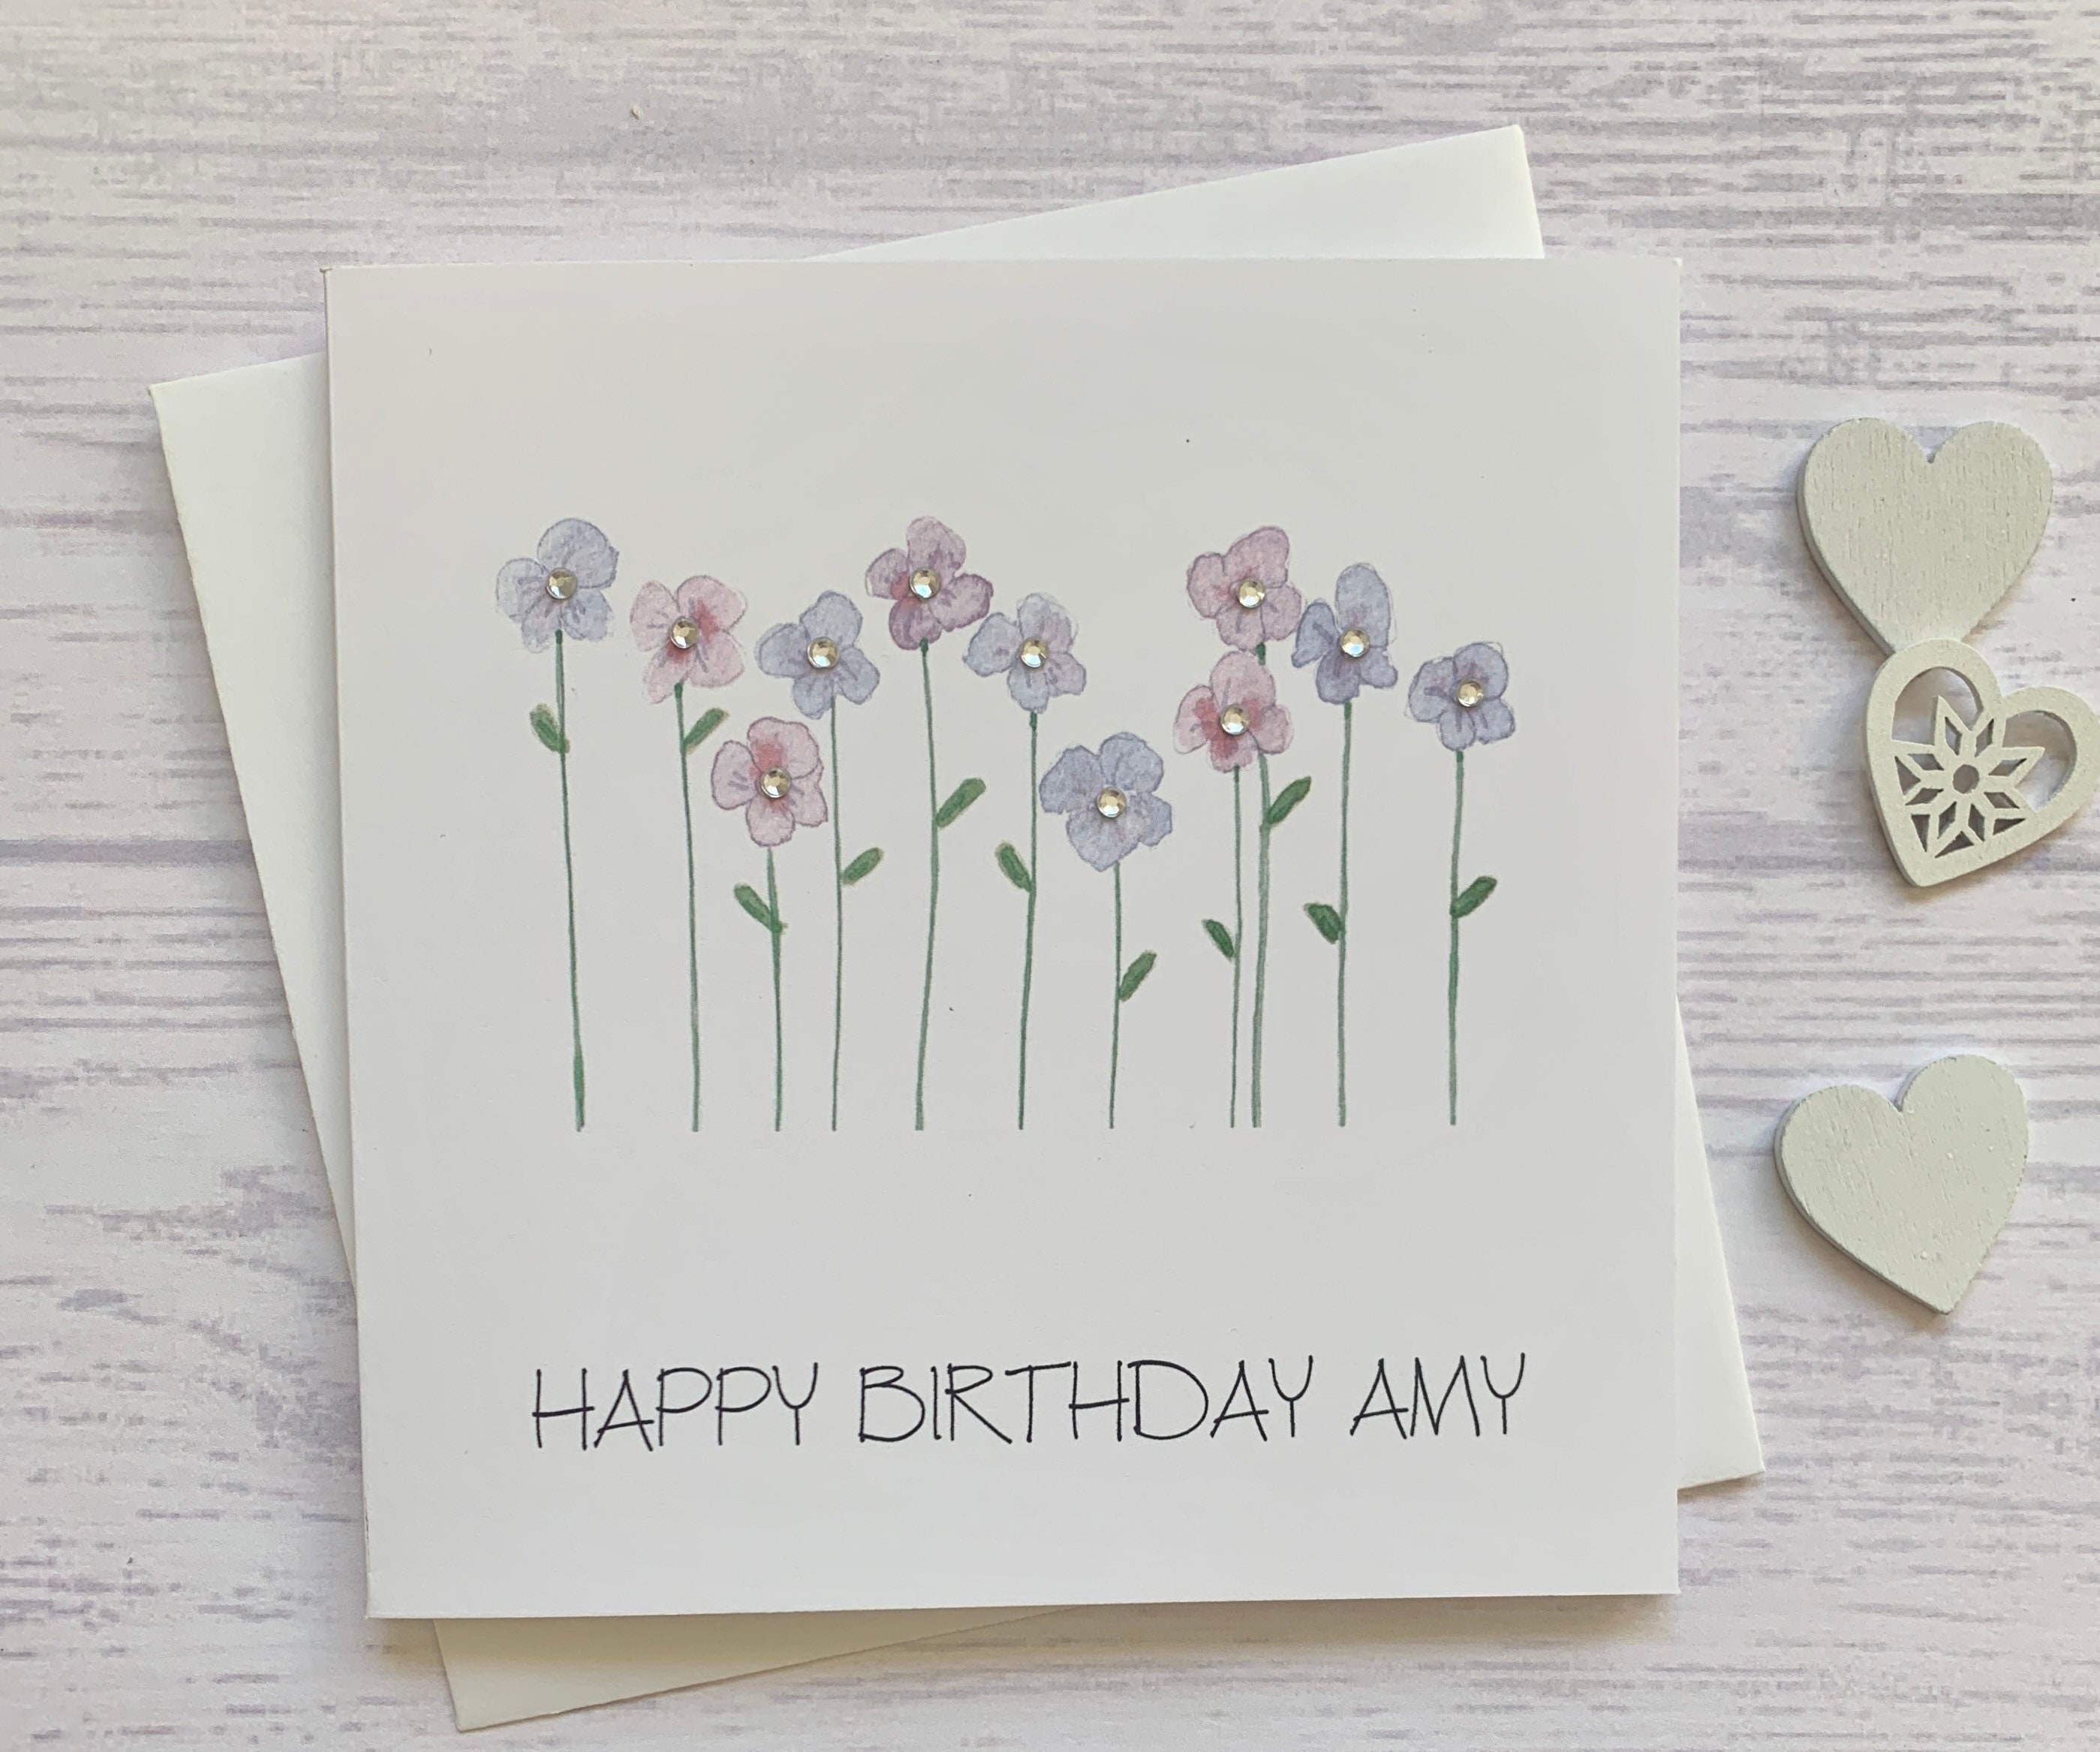 100+ HD Happy Birthday Amy Cake Images And Shayari